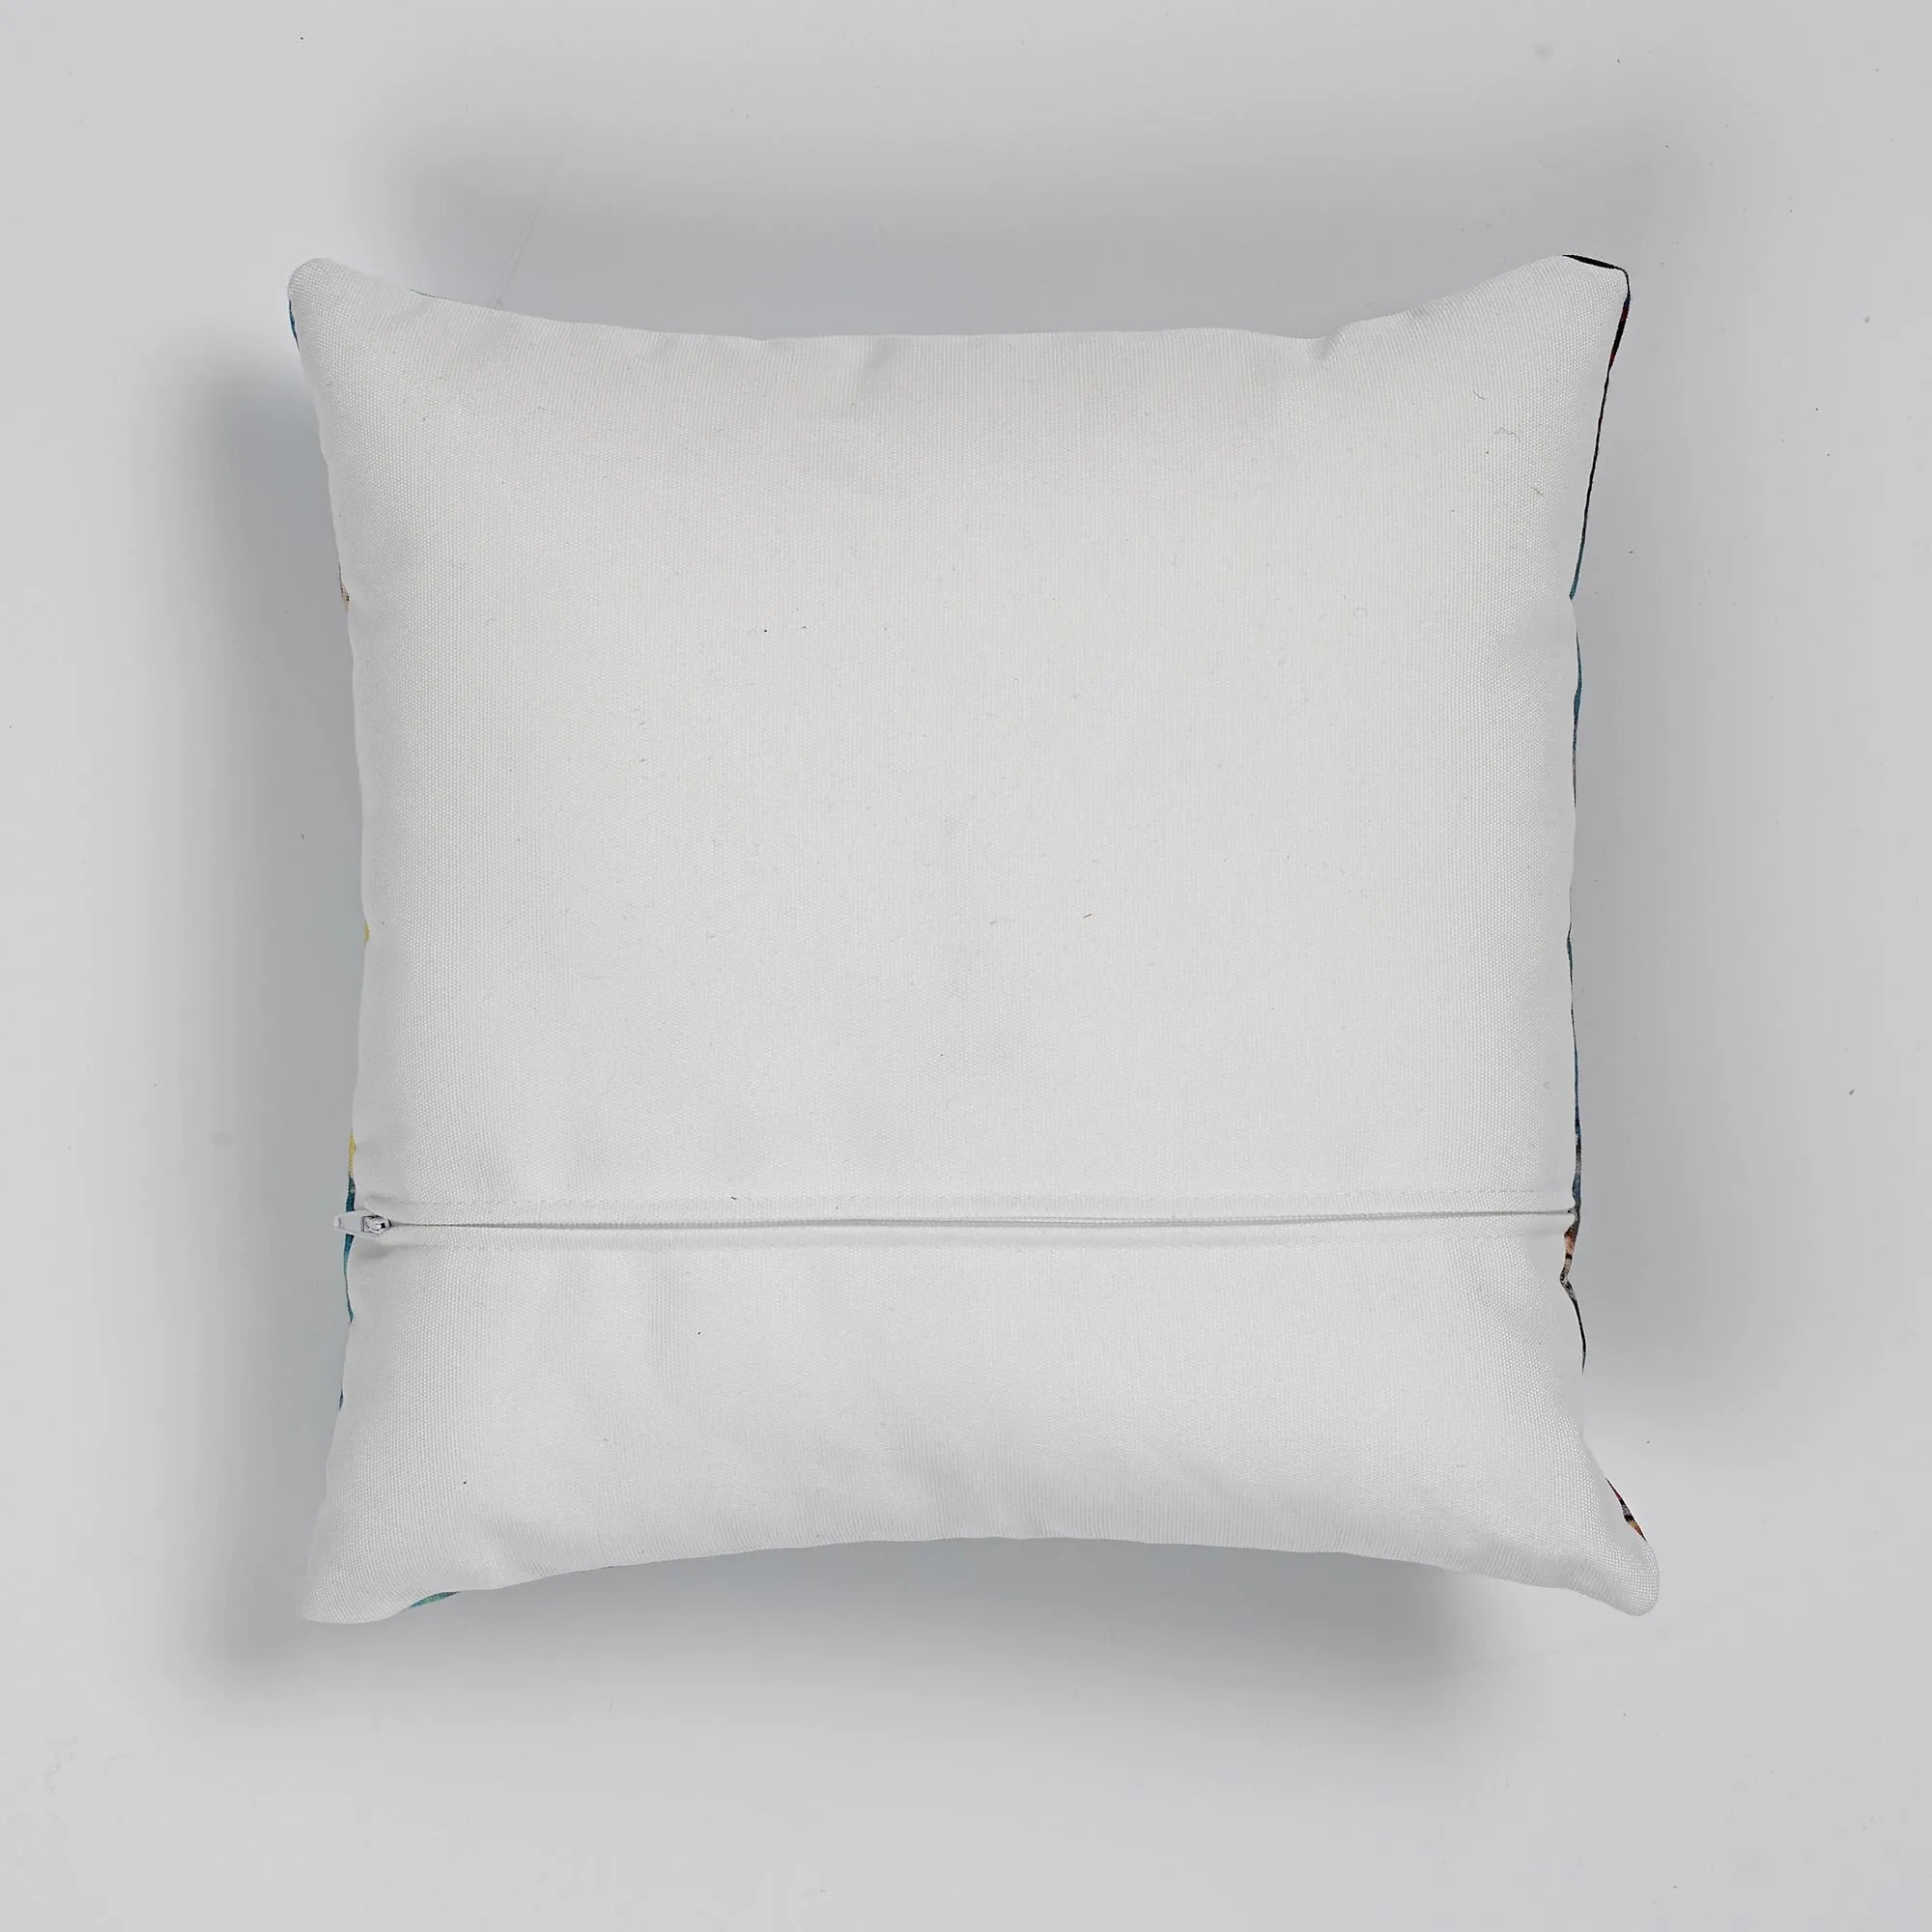 Flying High 4 Cushion - Decorative Throw Pillow - Throw Pillows - Aesthetic Art